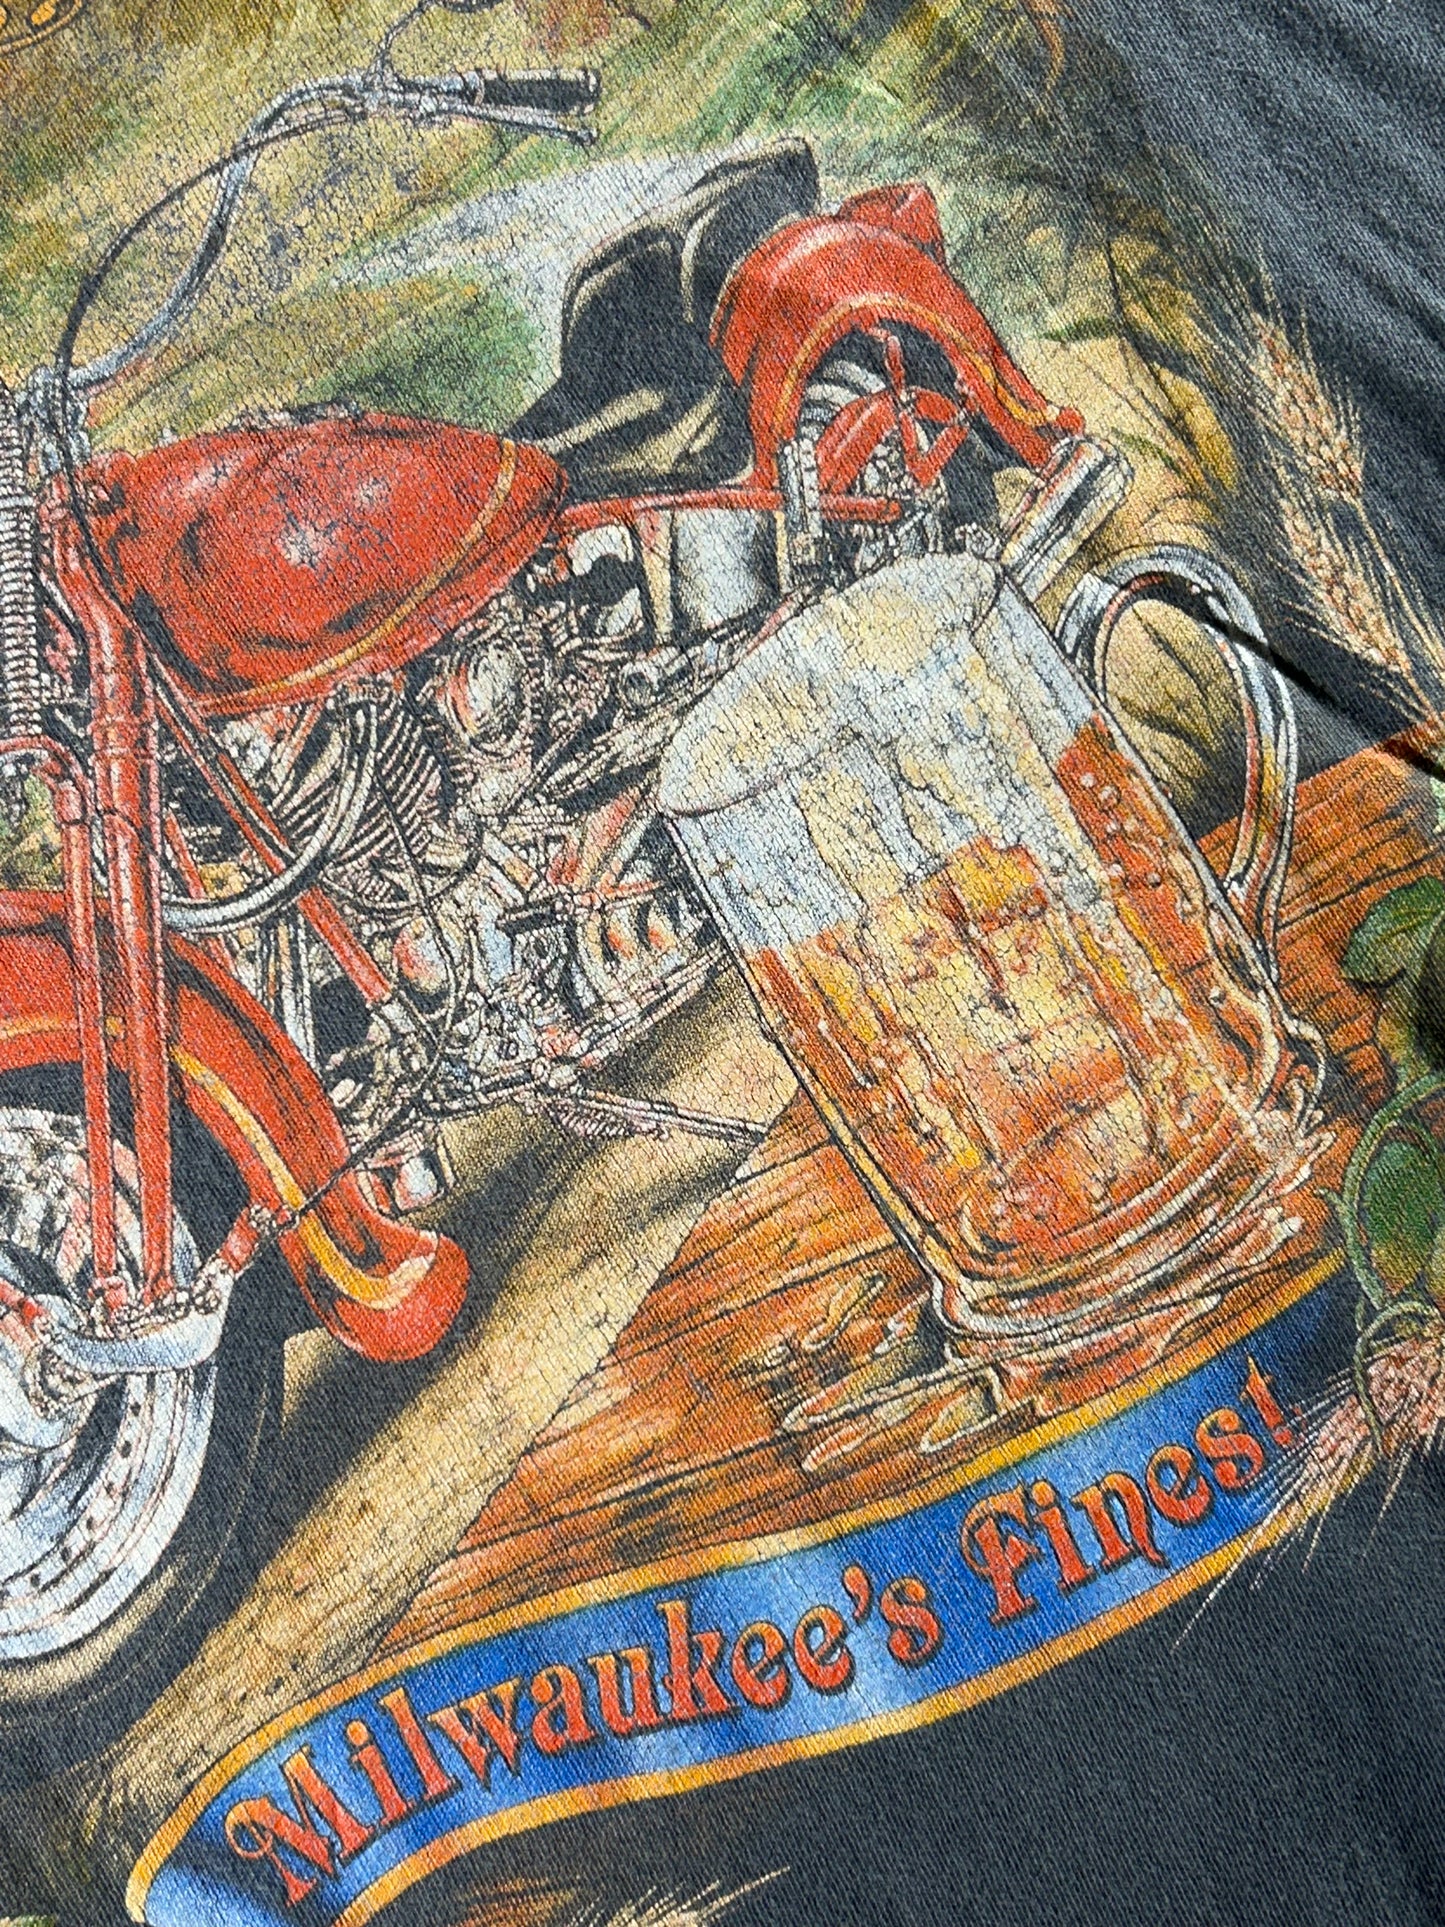 Vintage Biker T-Shirt SO GOOD Hot Bikes & Cold Beer 90's Wyoming Single Stitch